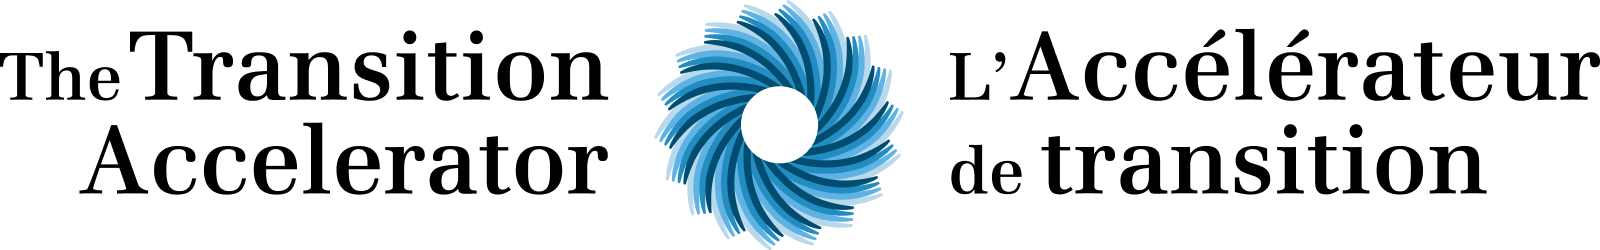 Logo for Transition Accelerator on a transparent background